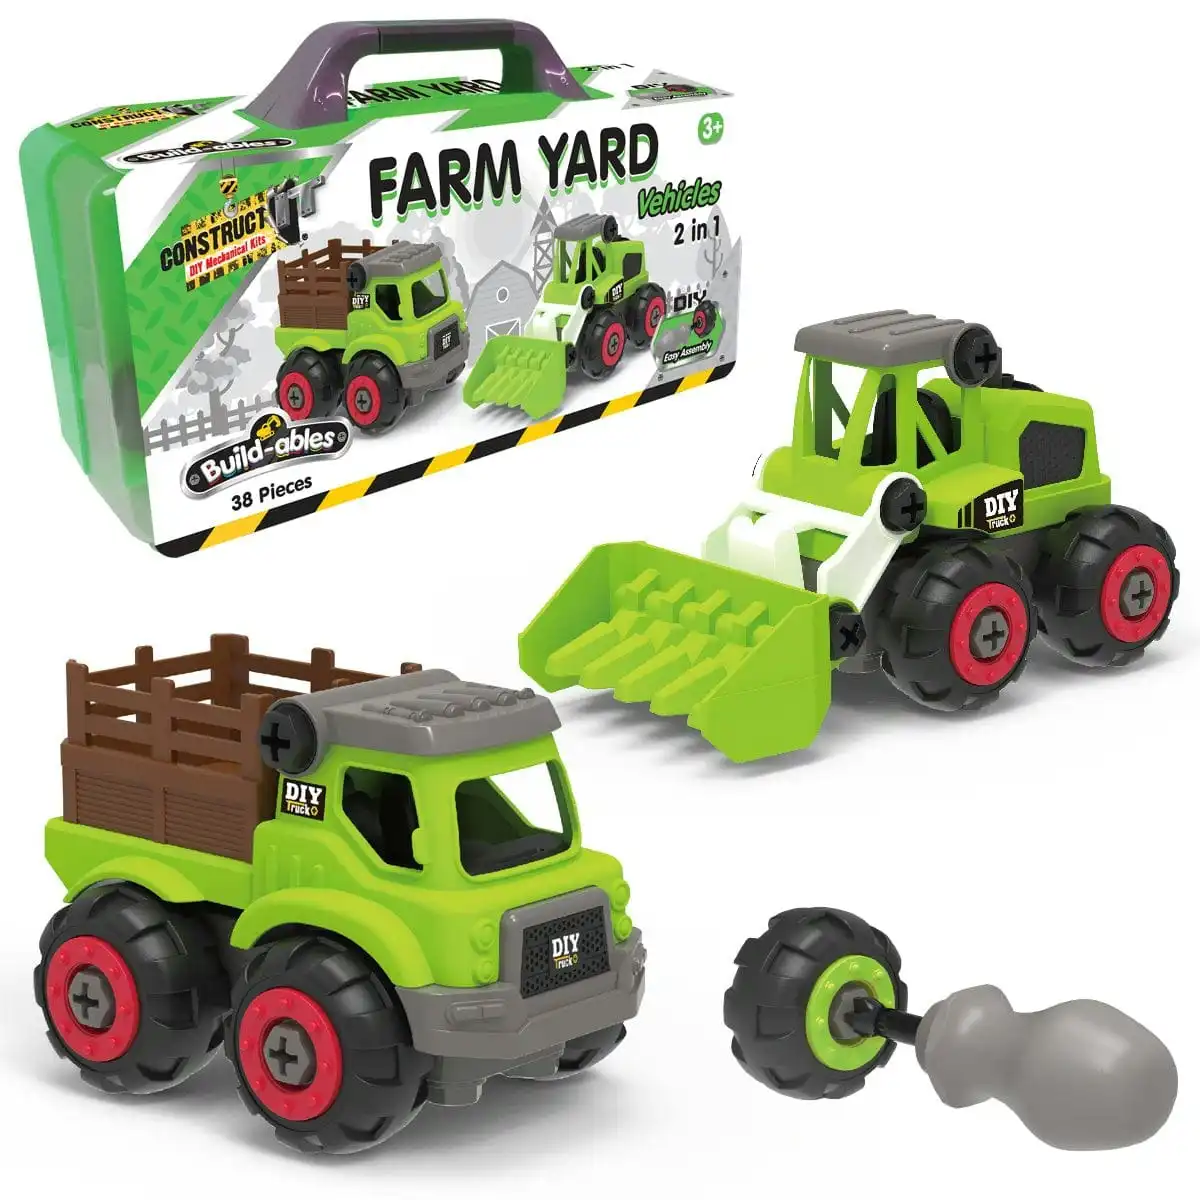 Build-ables Farm Yard 2 in 1